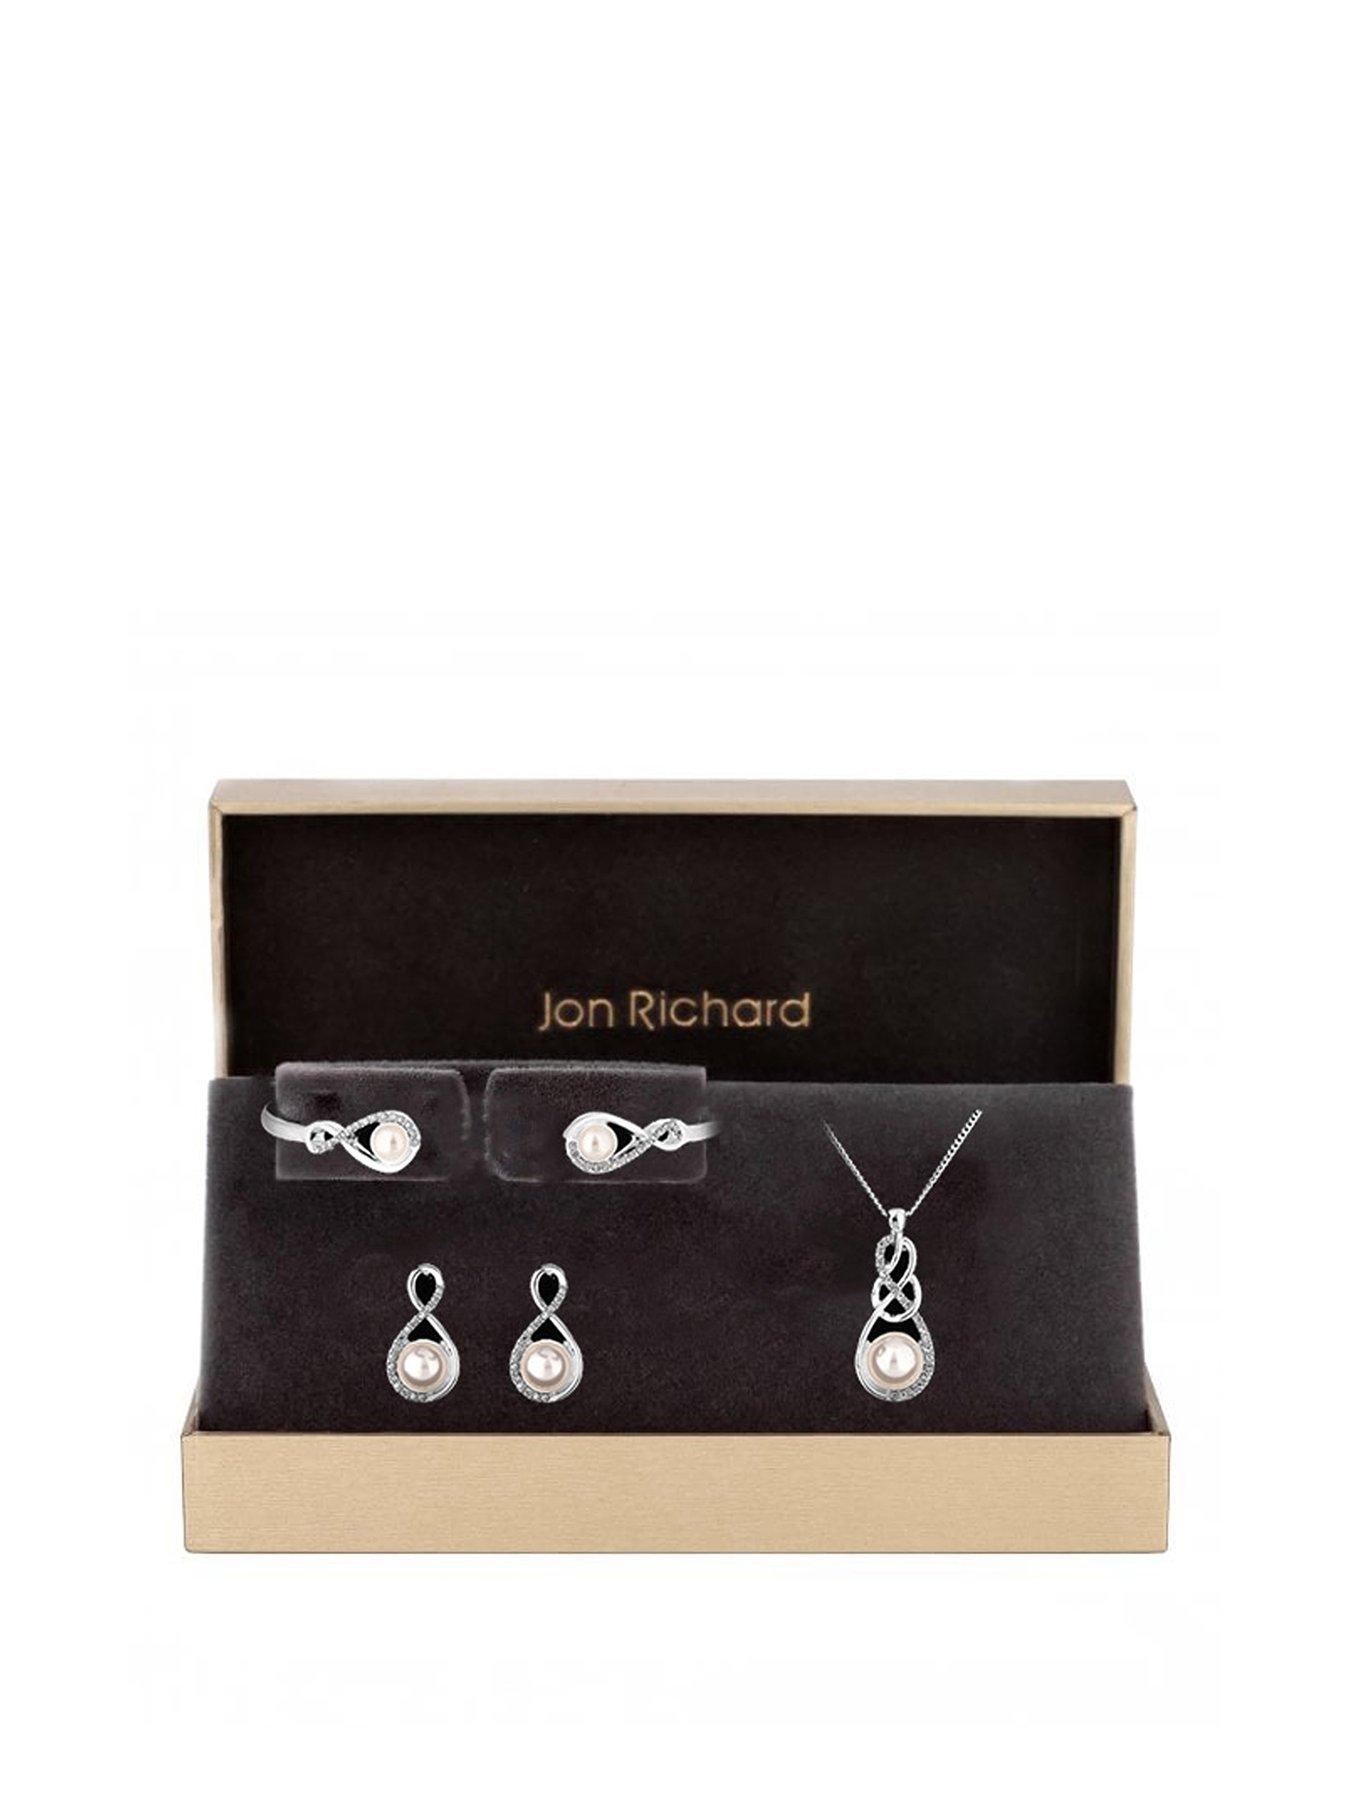 Small Captured Hearts Stud Earrings UK Seller Free Gift Box